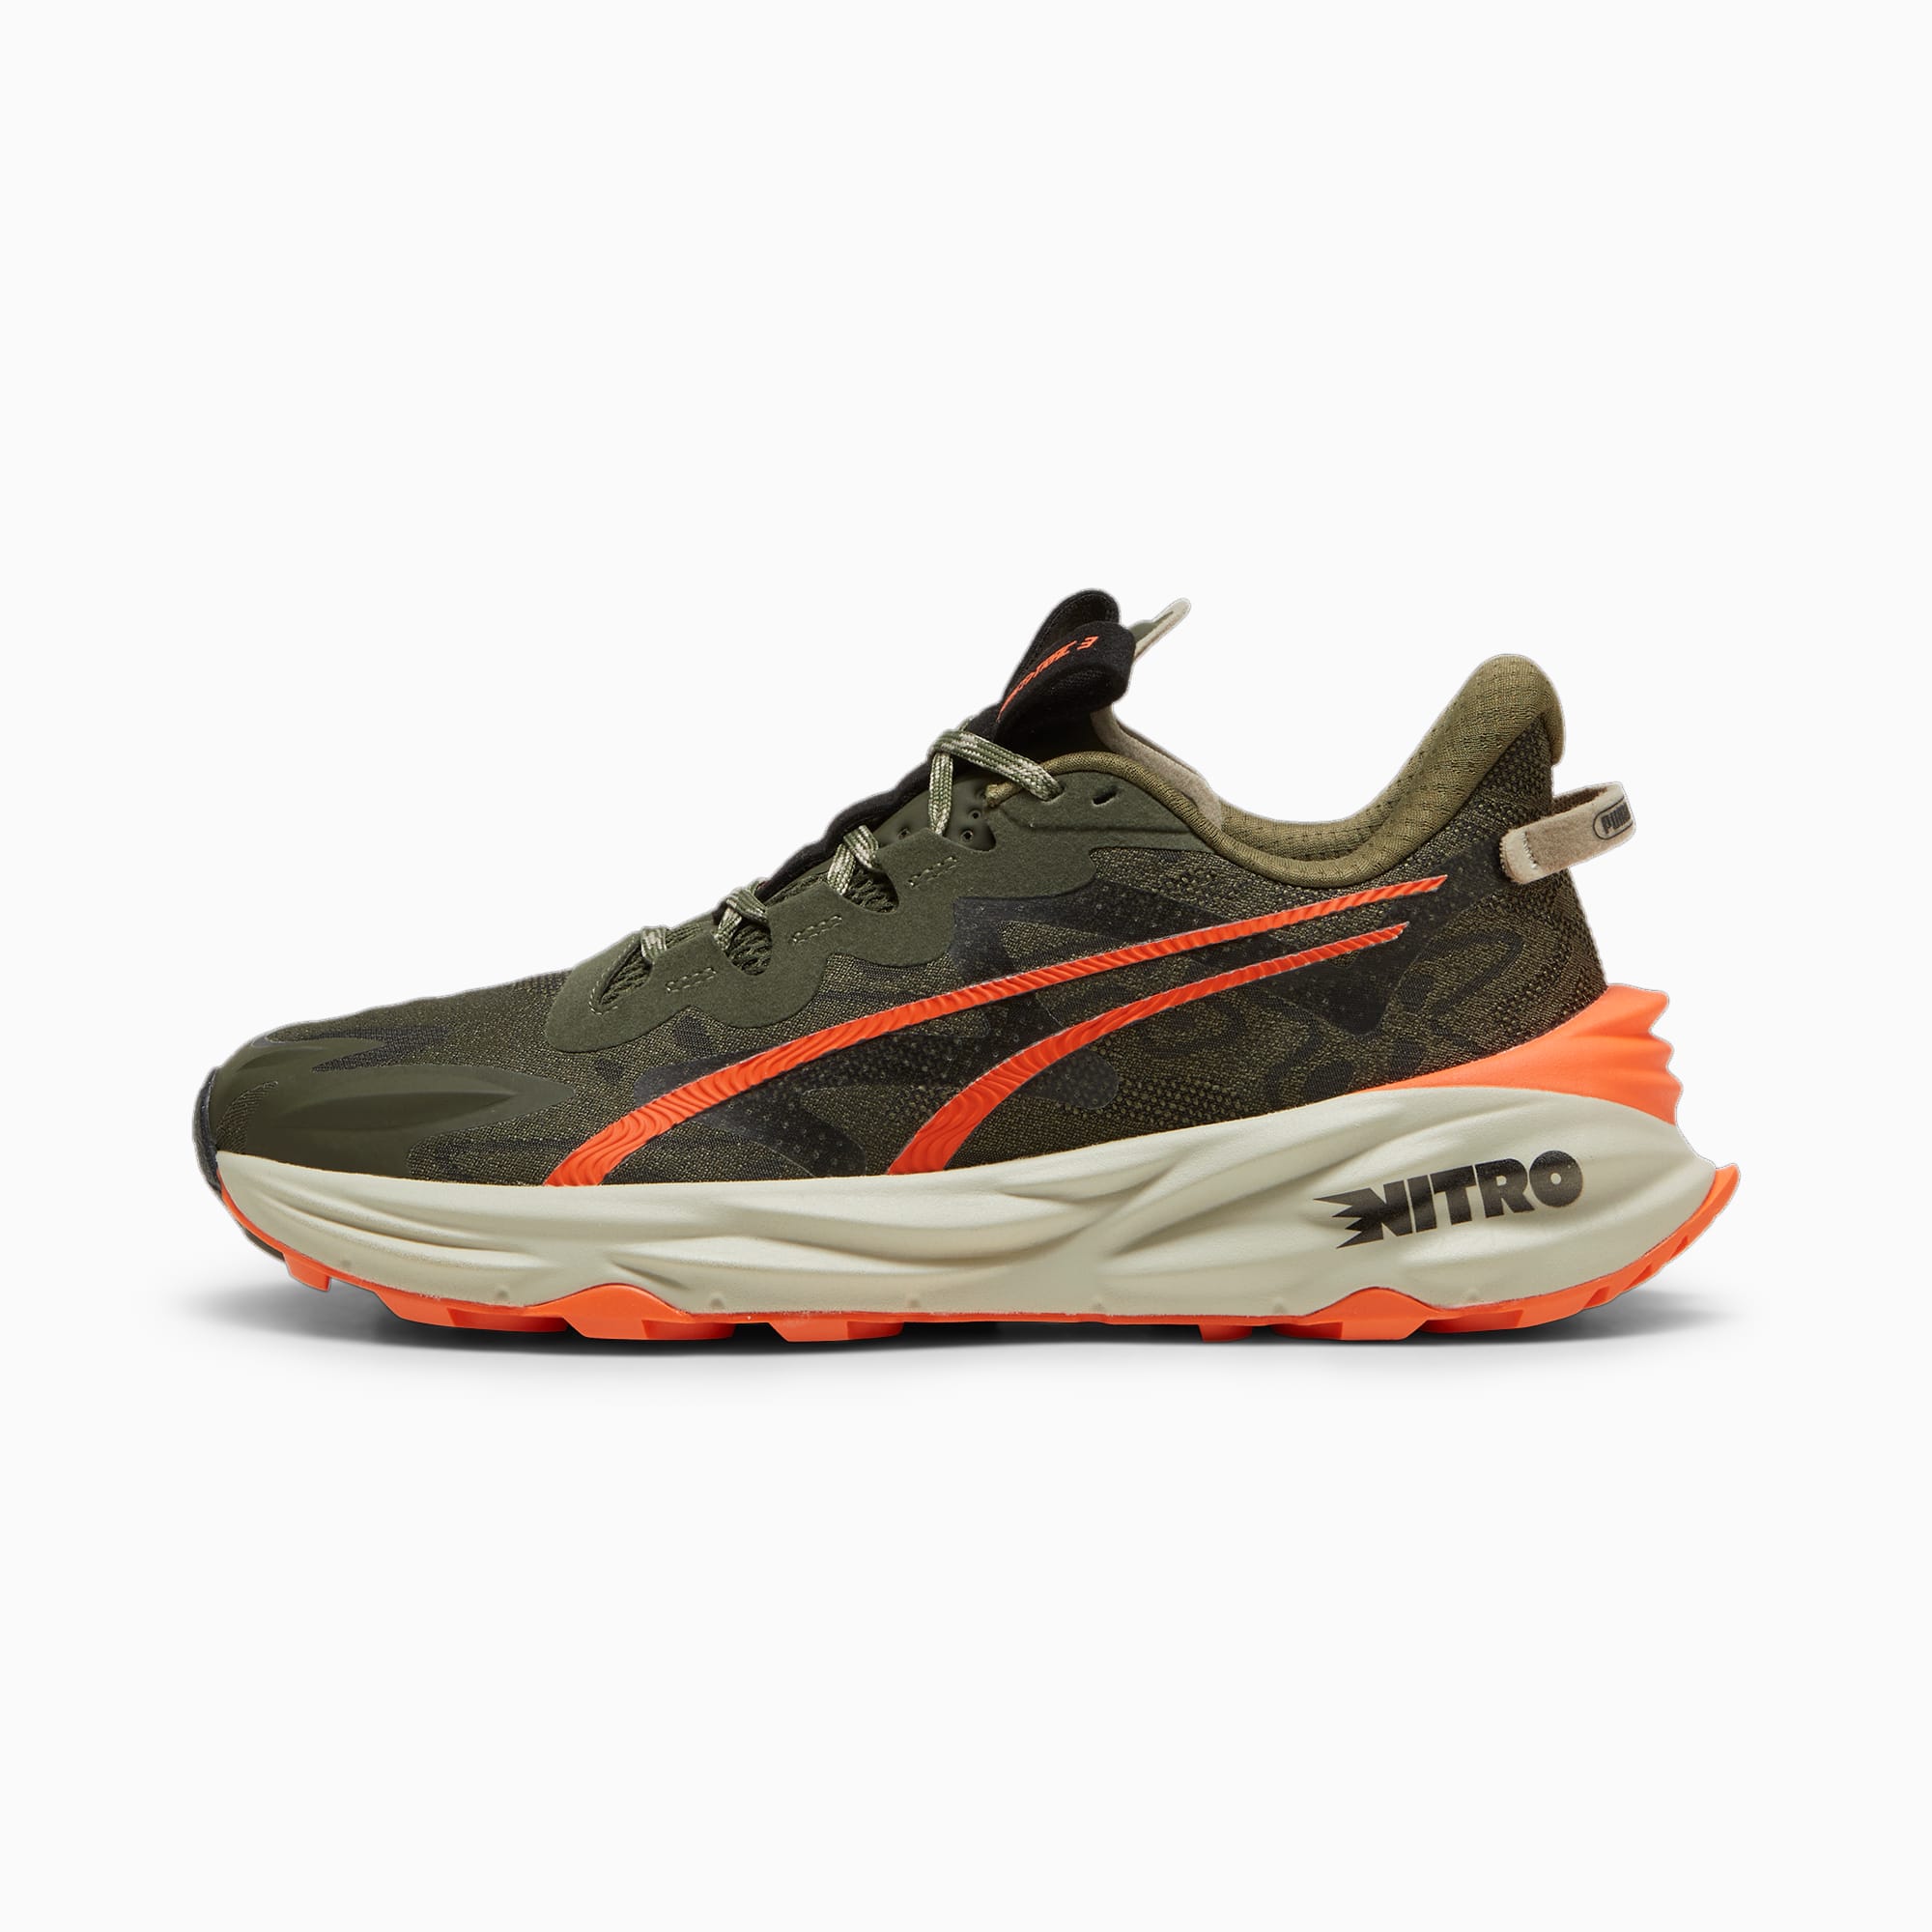 PUMA Fast-Trac Nitroâ¢ 3 Trail Running Shoes Men